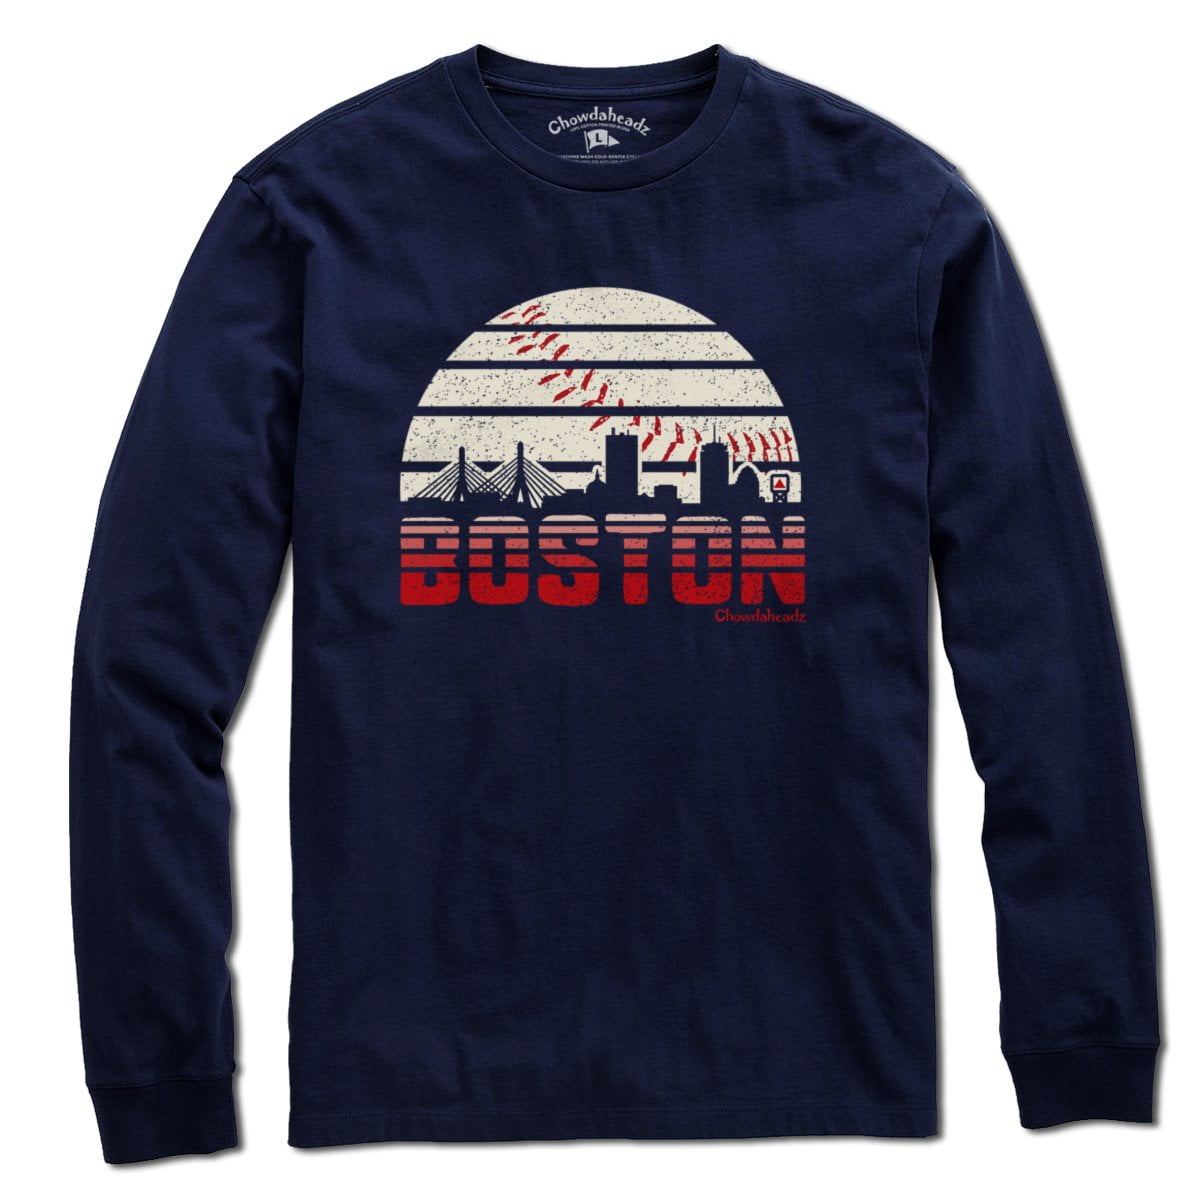 Boston Baseball Skyline T-Shirt - Chowdaheadz